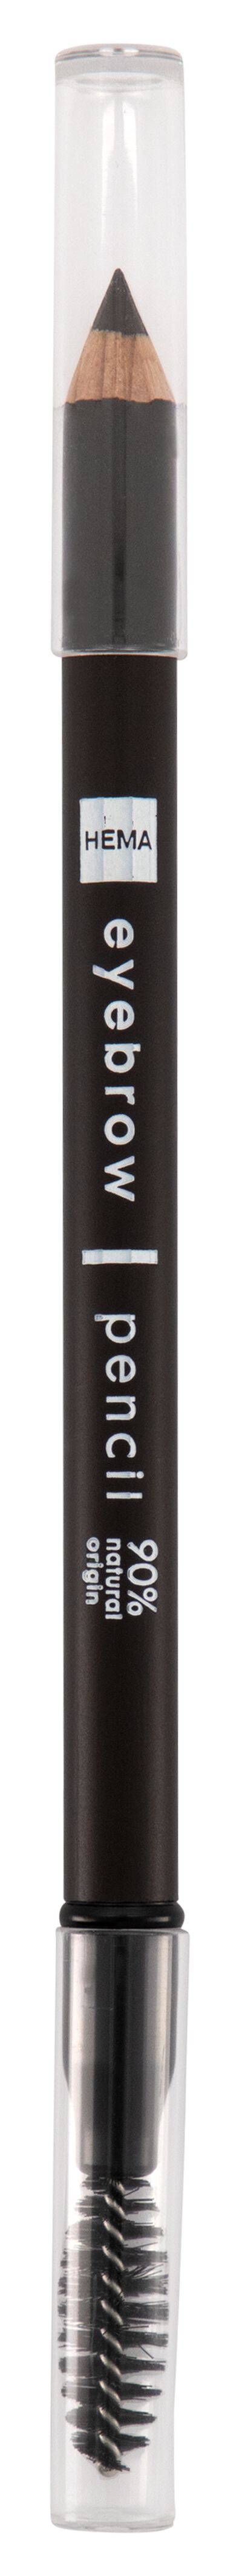 crayon sourcils 86 noir/marron - 11210286 - HEMA